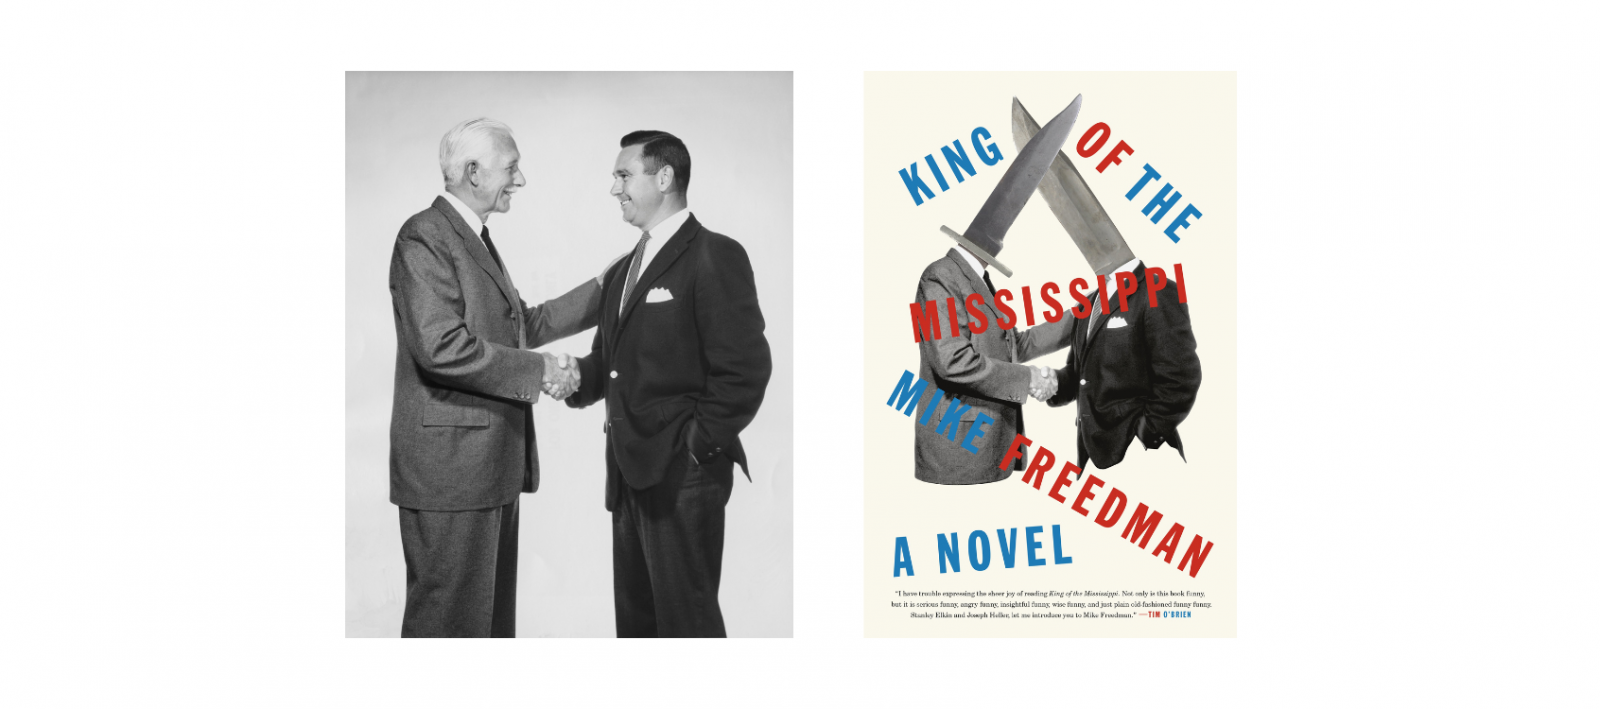 King of the Mississippi: Two businessmen shaking hands / Bridgeman Images, 